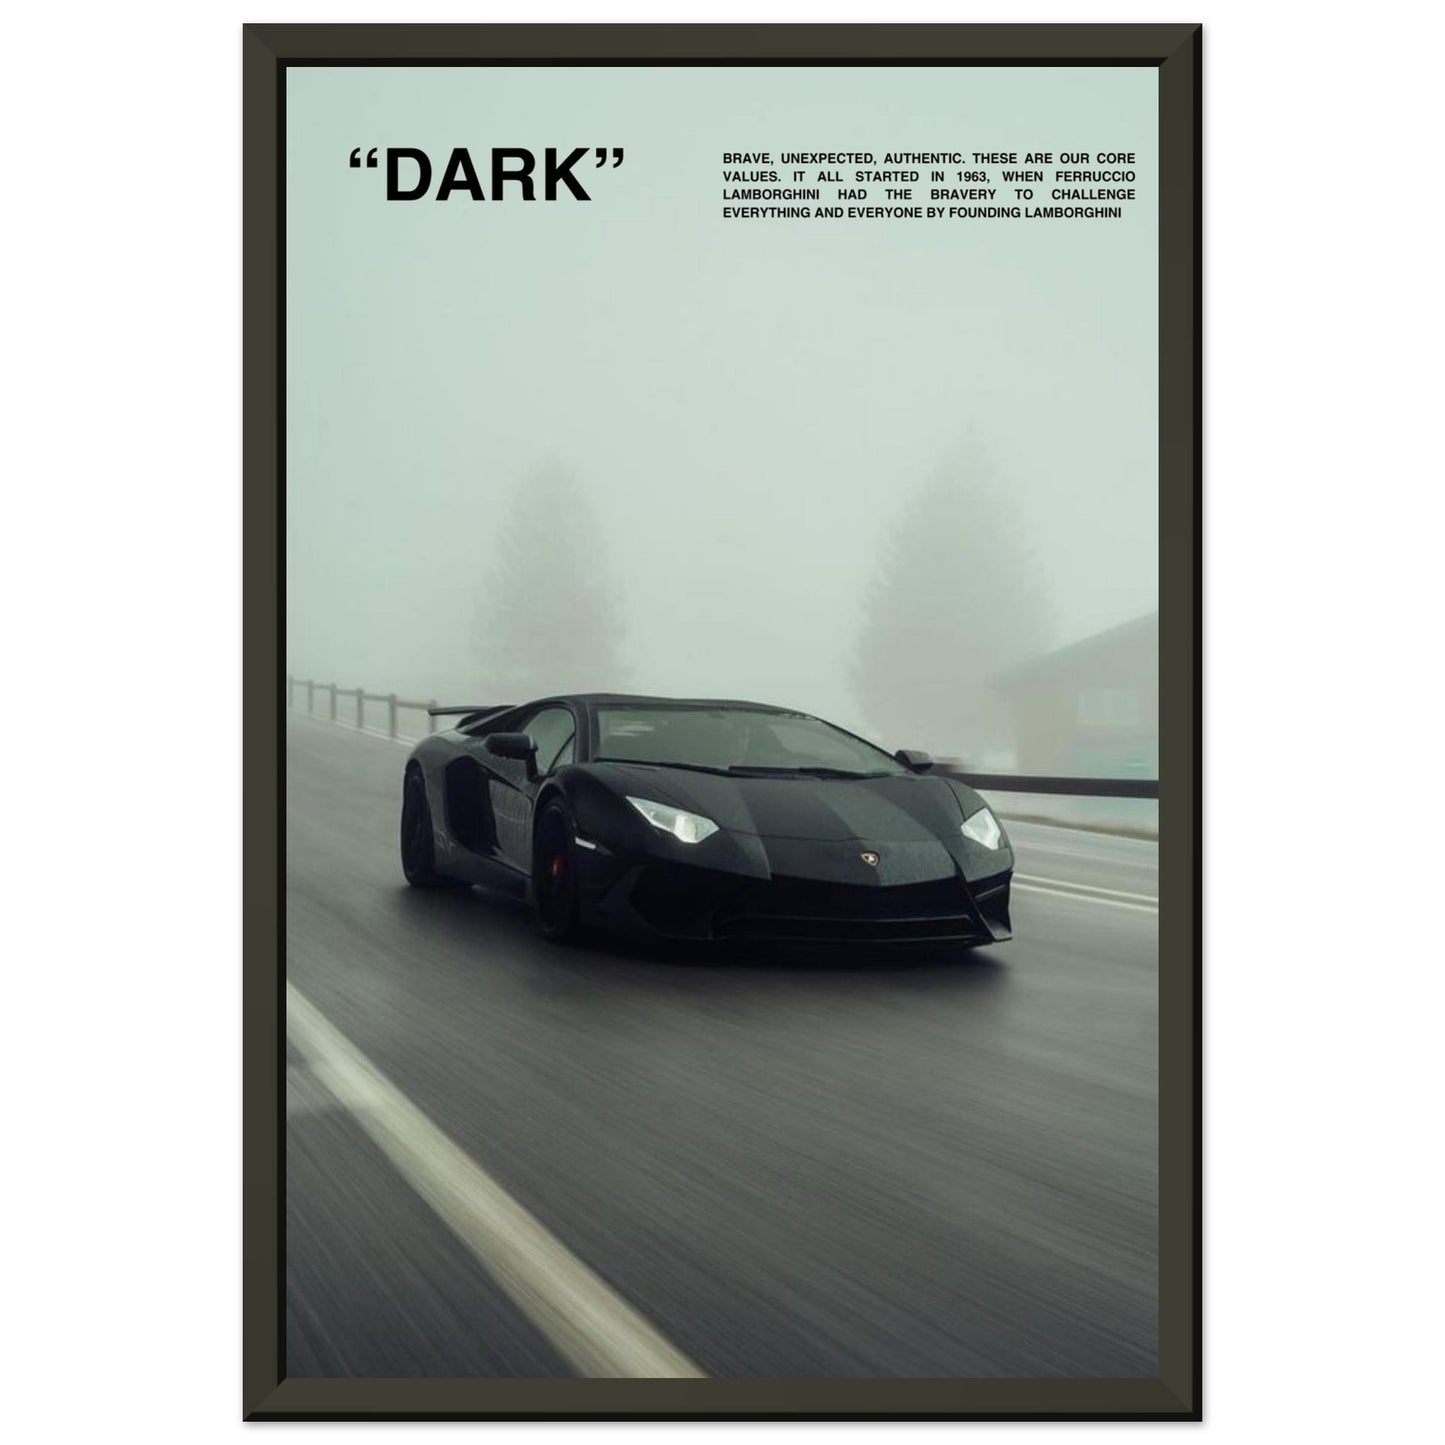 Lamborghini "DARK"